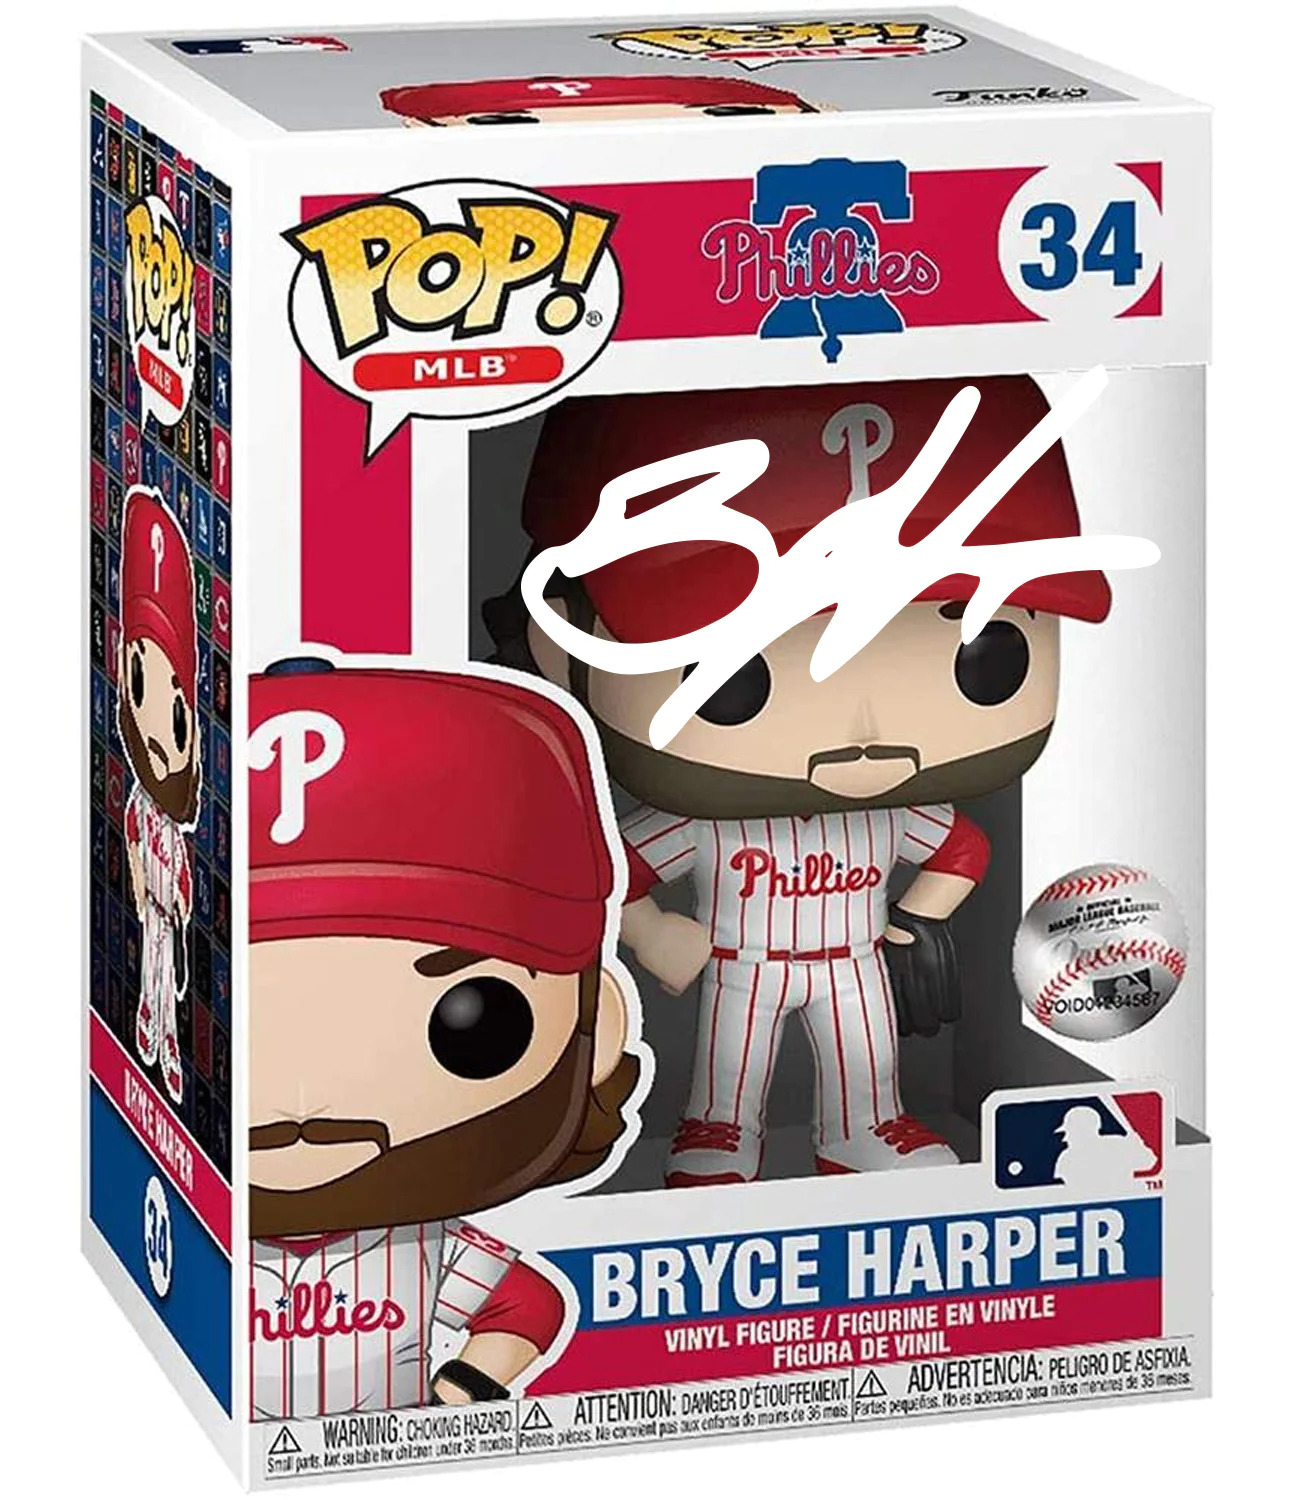 Bryce Harper #34 Facsimile Signed Reprint Funko POP MLB: Figurine with Case